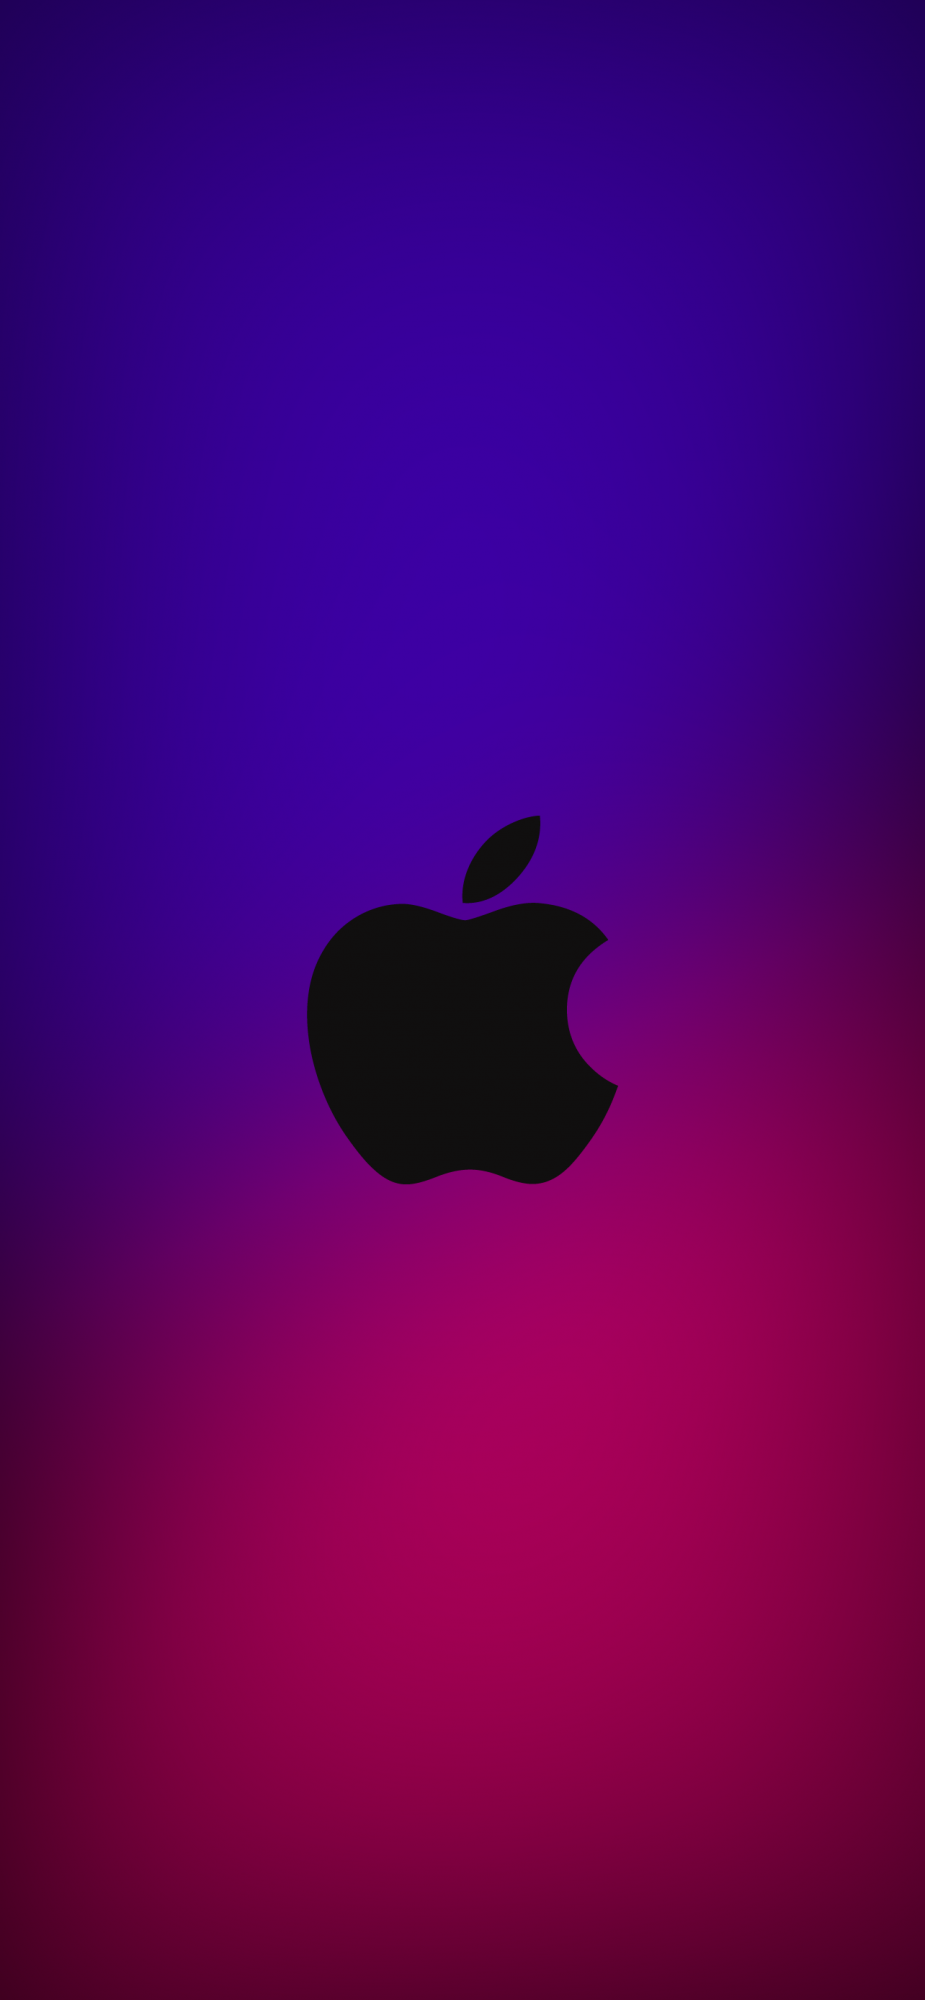 Purple apple wallpaper  Apple wallpaper, Retro wallpaper iphone, Apple logo  wallpaper iphone